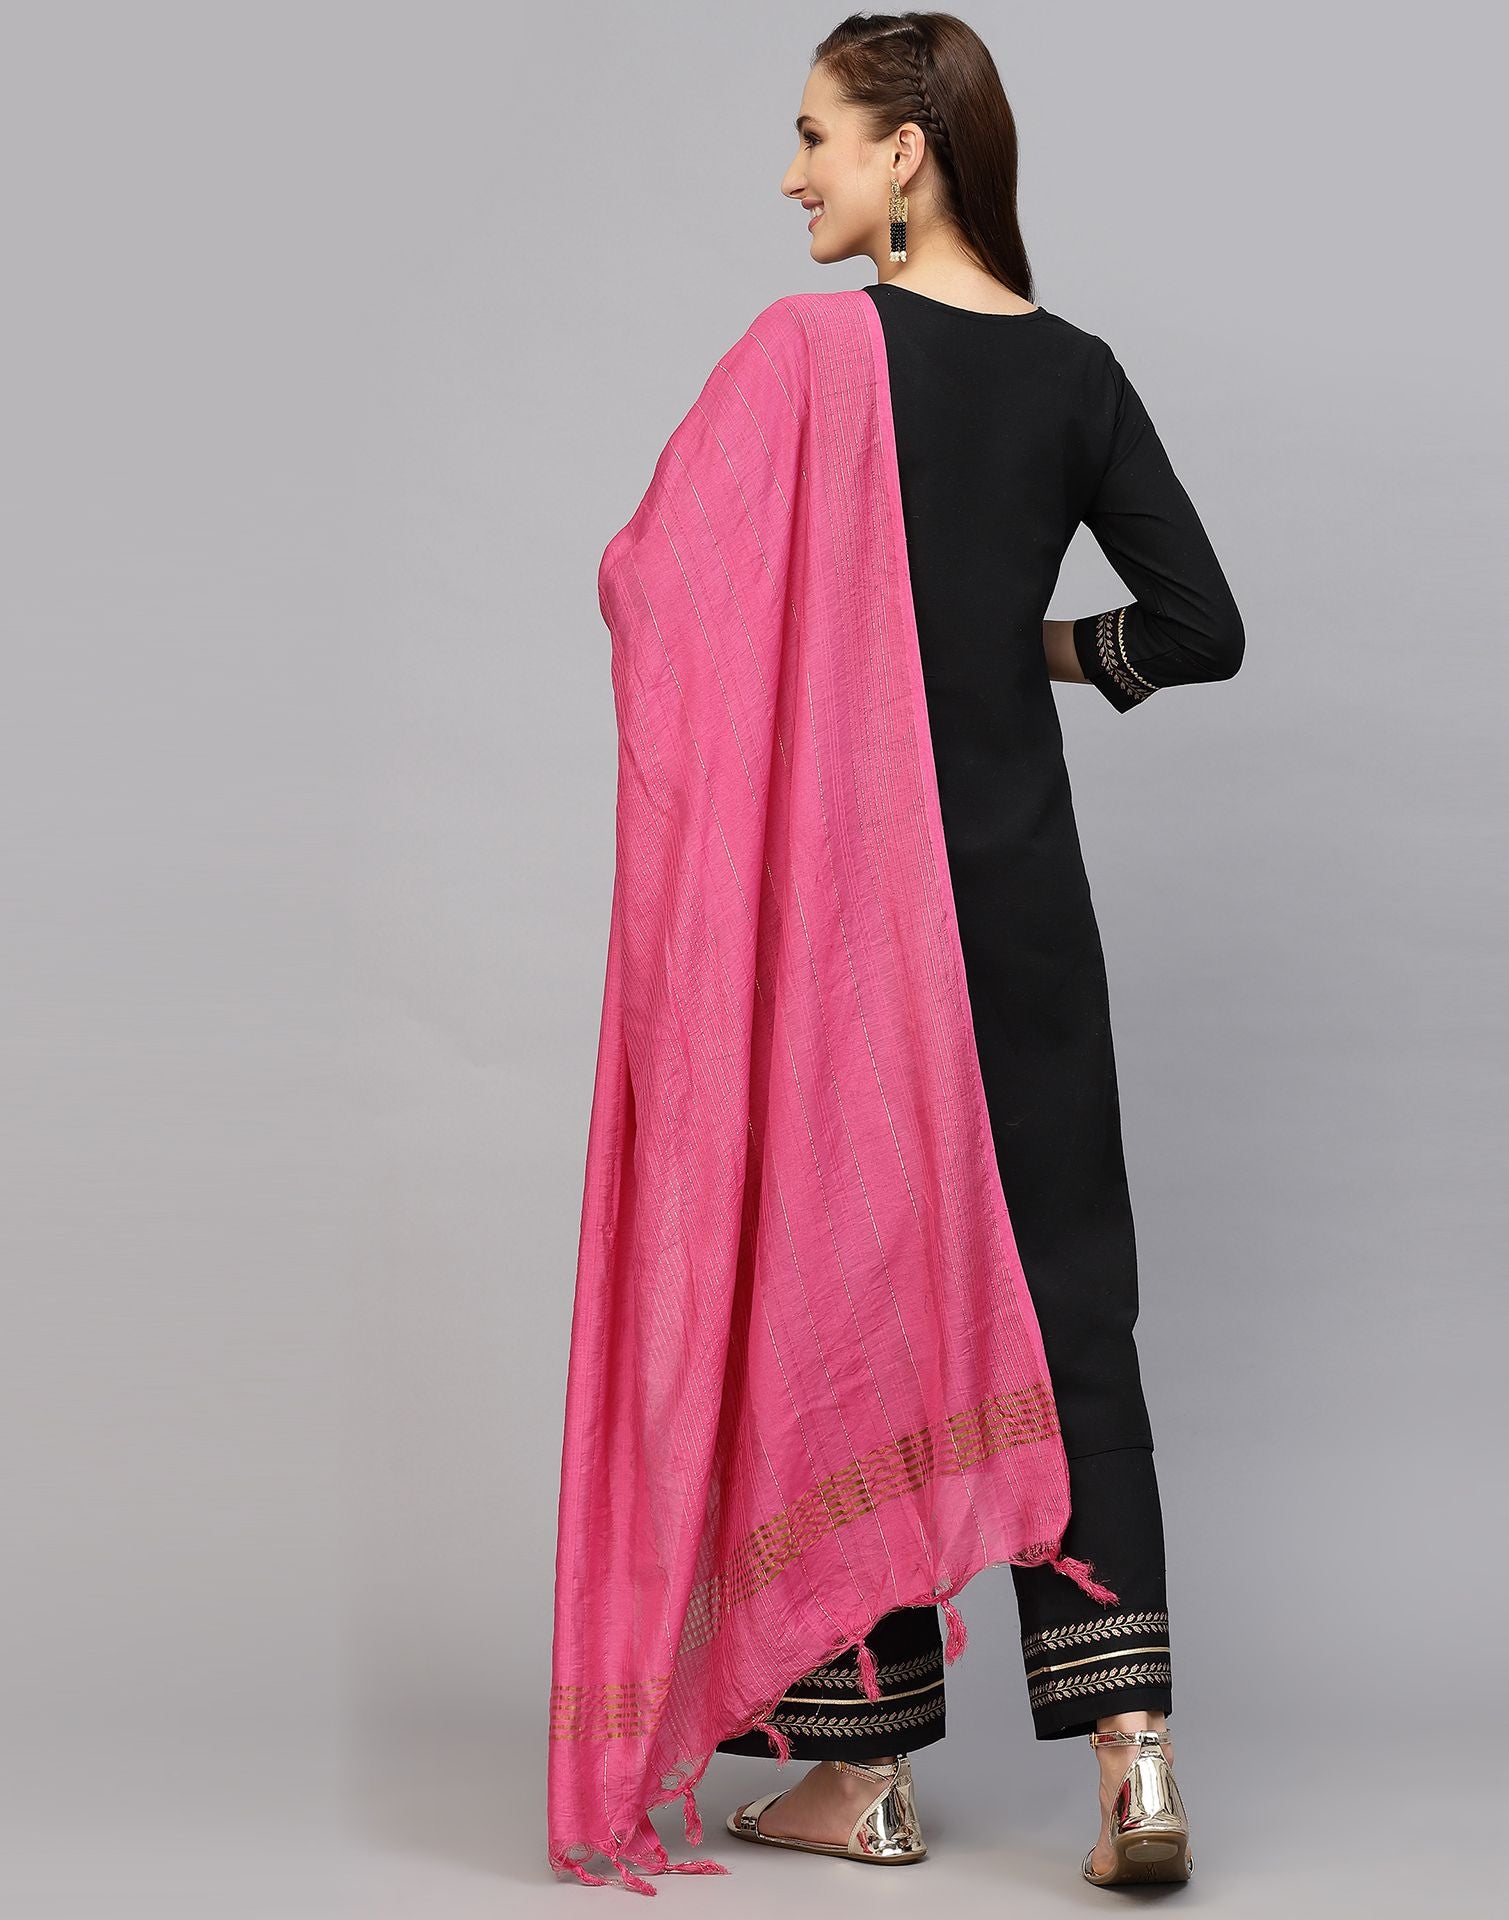 Women's scarf Embellished Net Dupatta/Chunni Color-Baby pink Free Shipping  | eBay